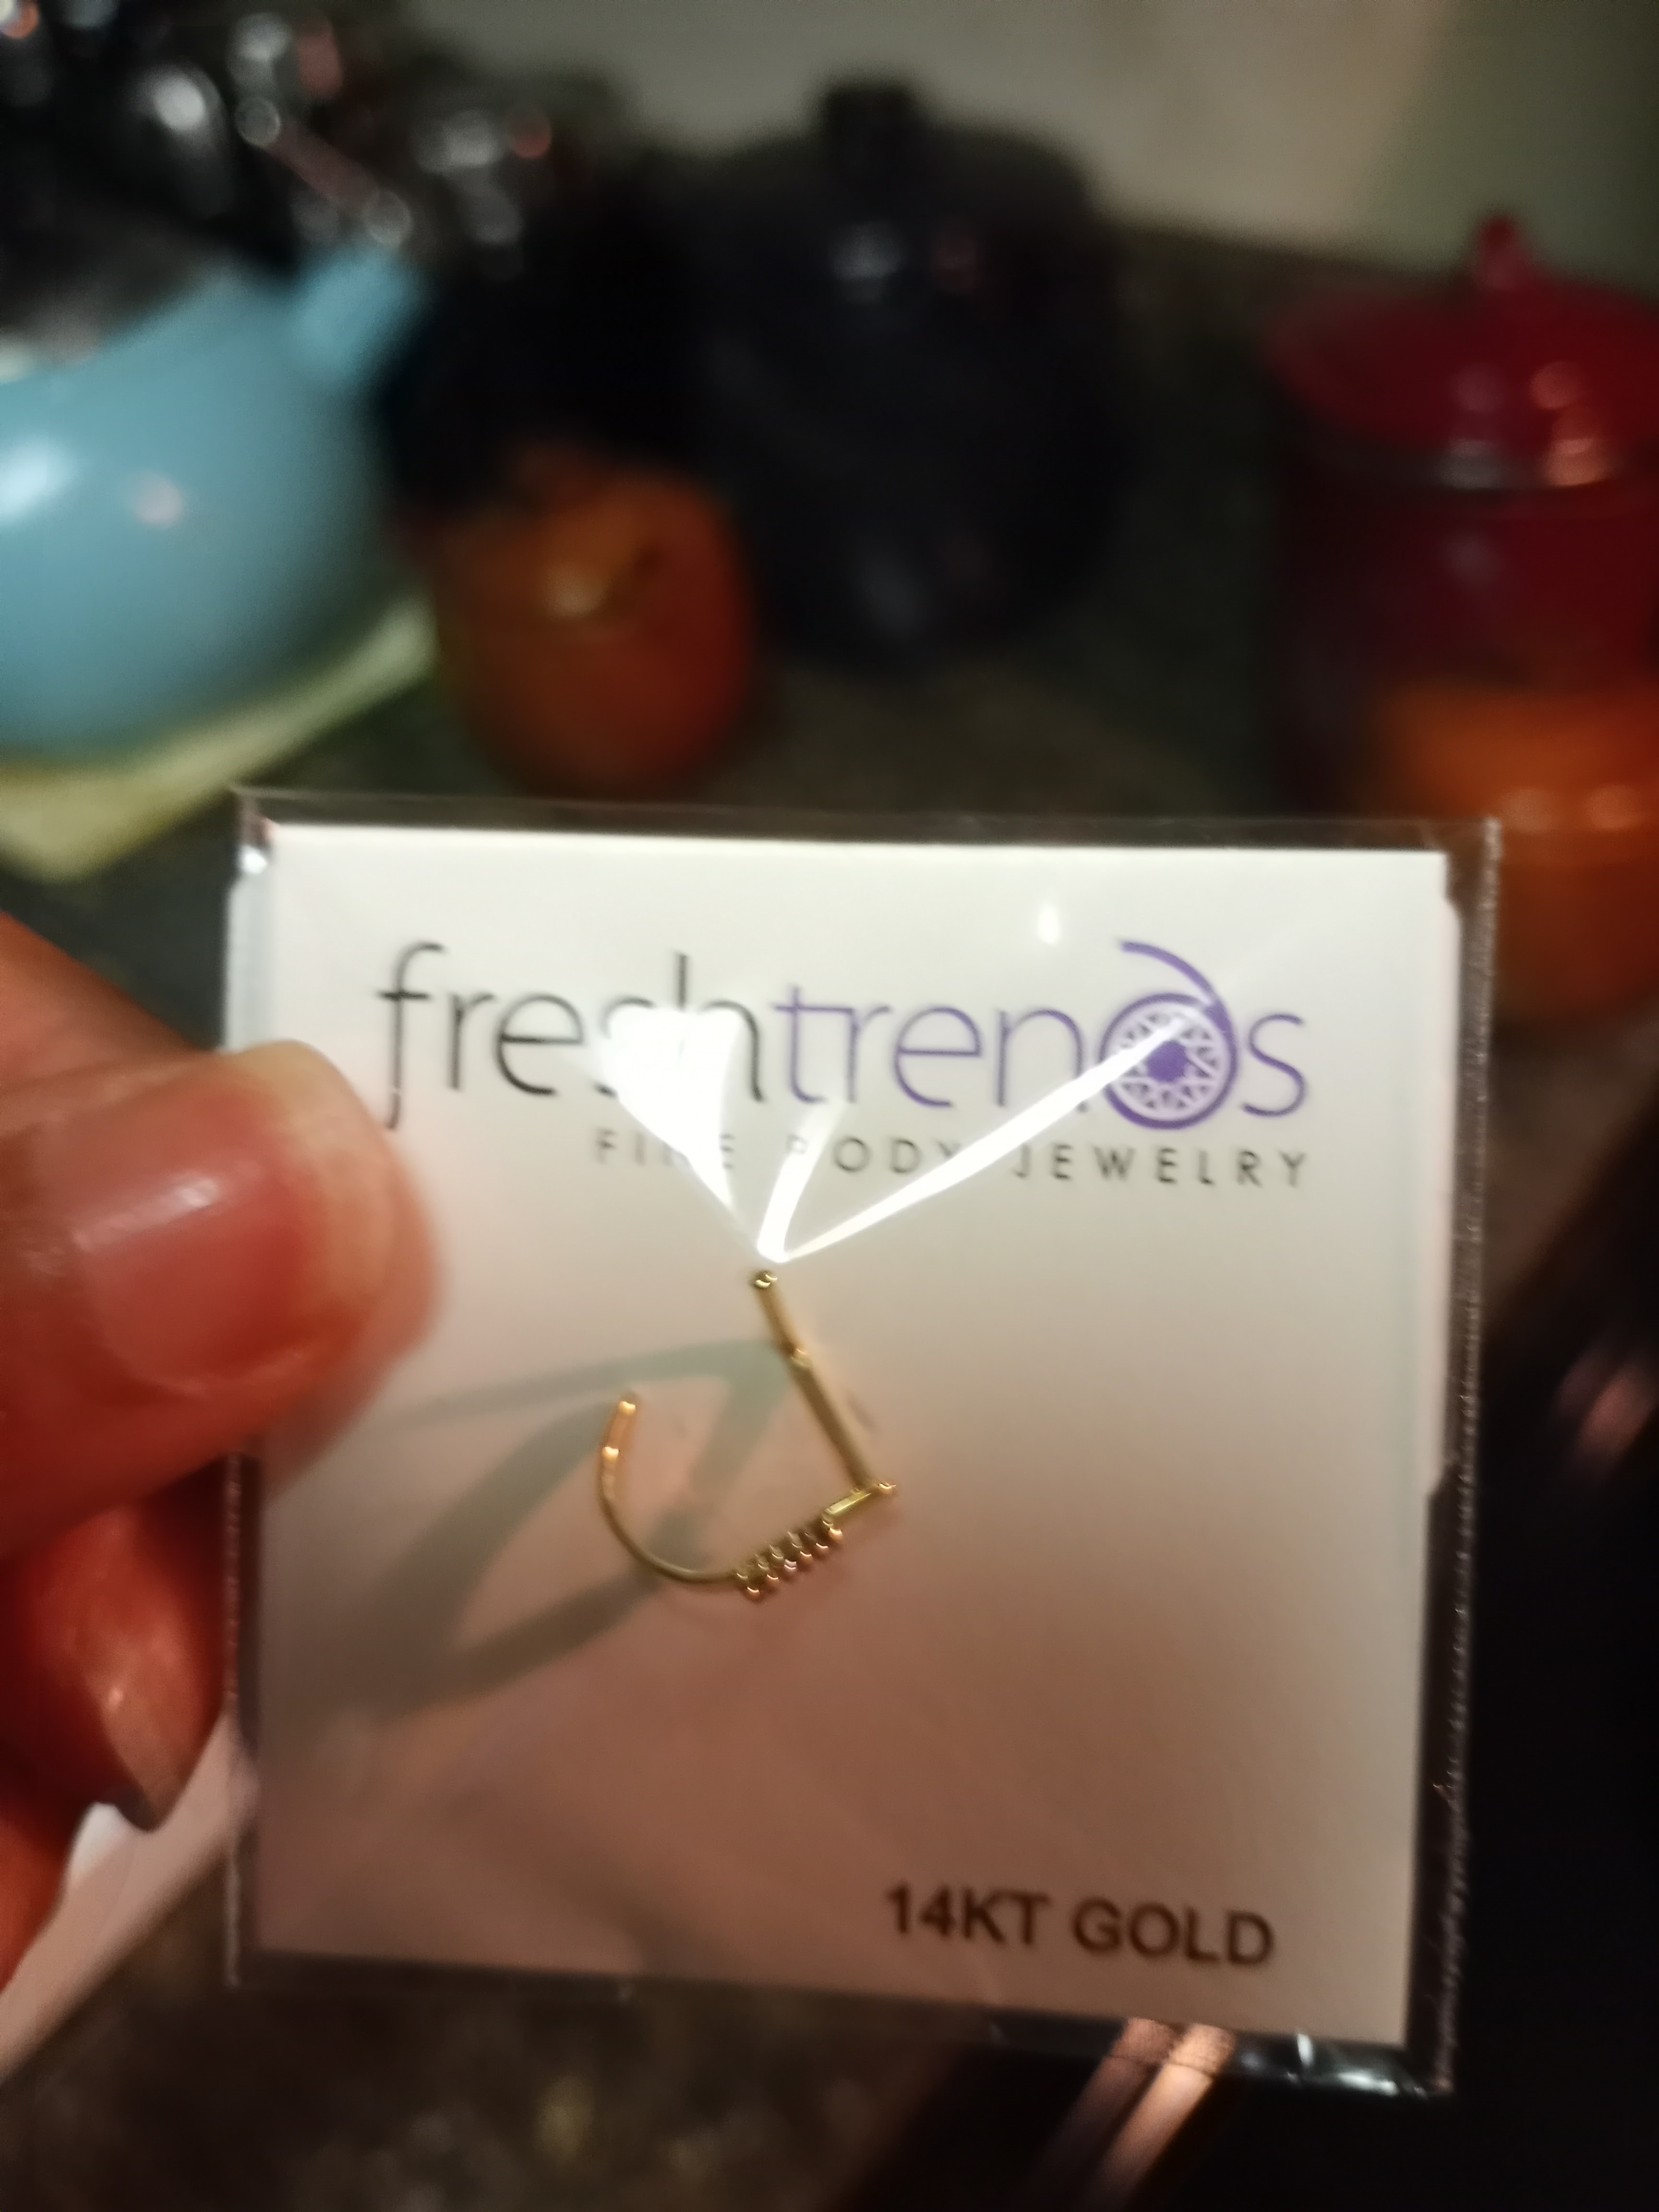 FreshTrends, Gold Body Jewelry